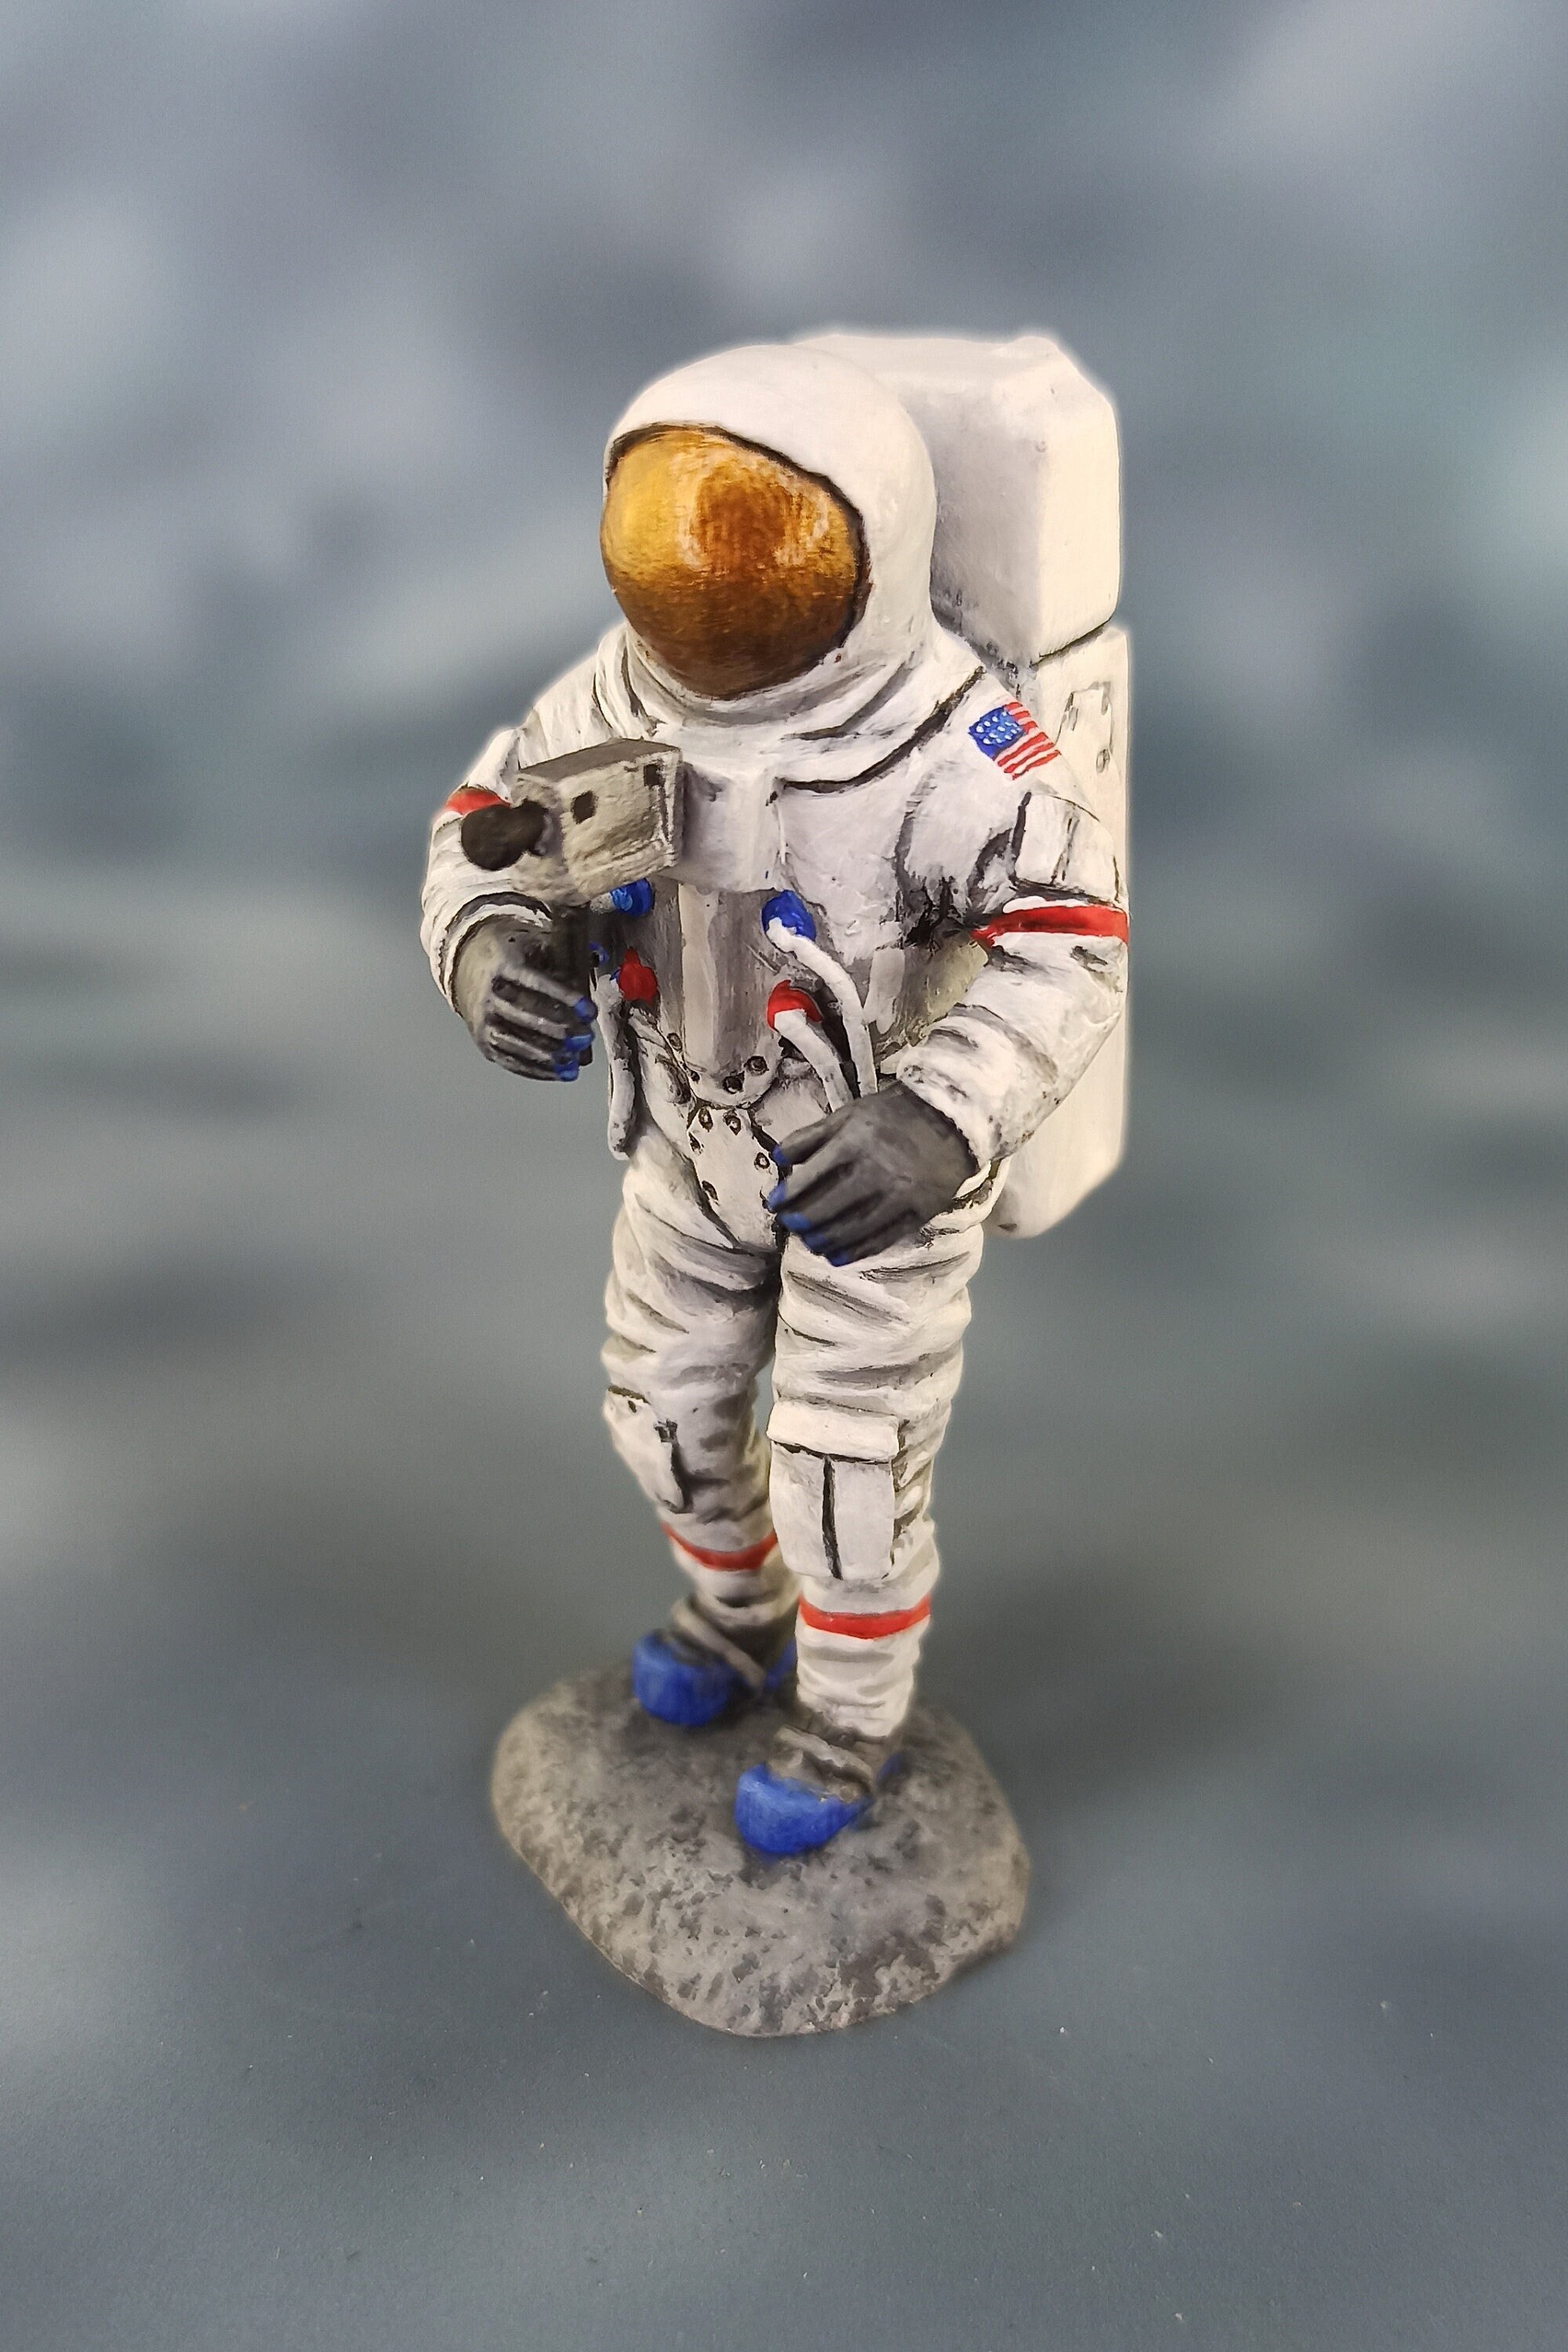 Miniature astronaut